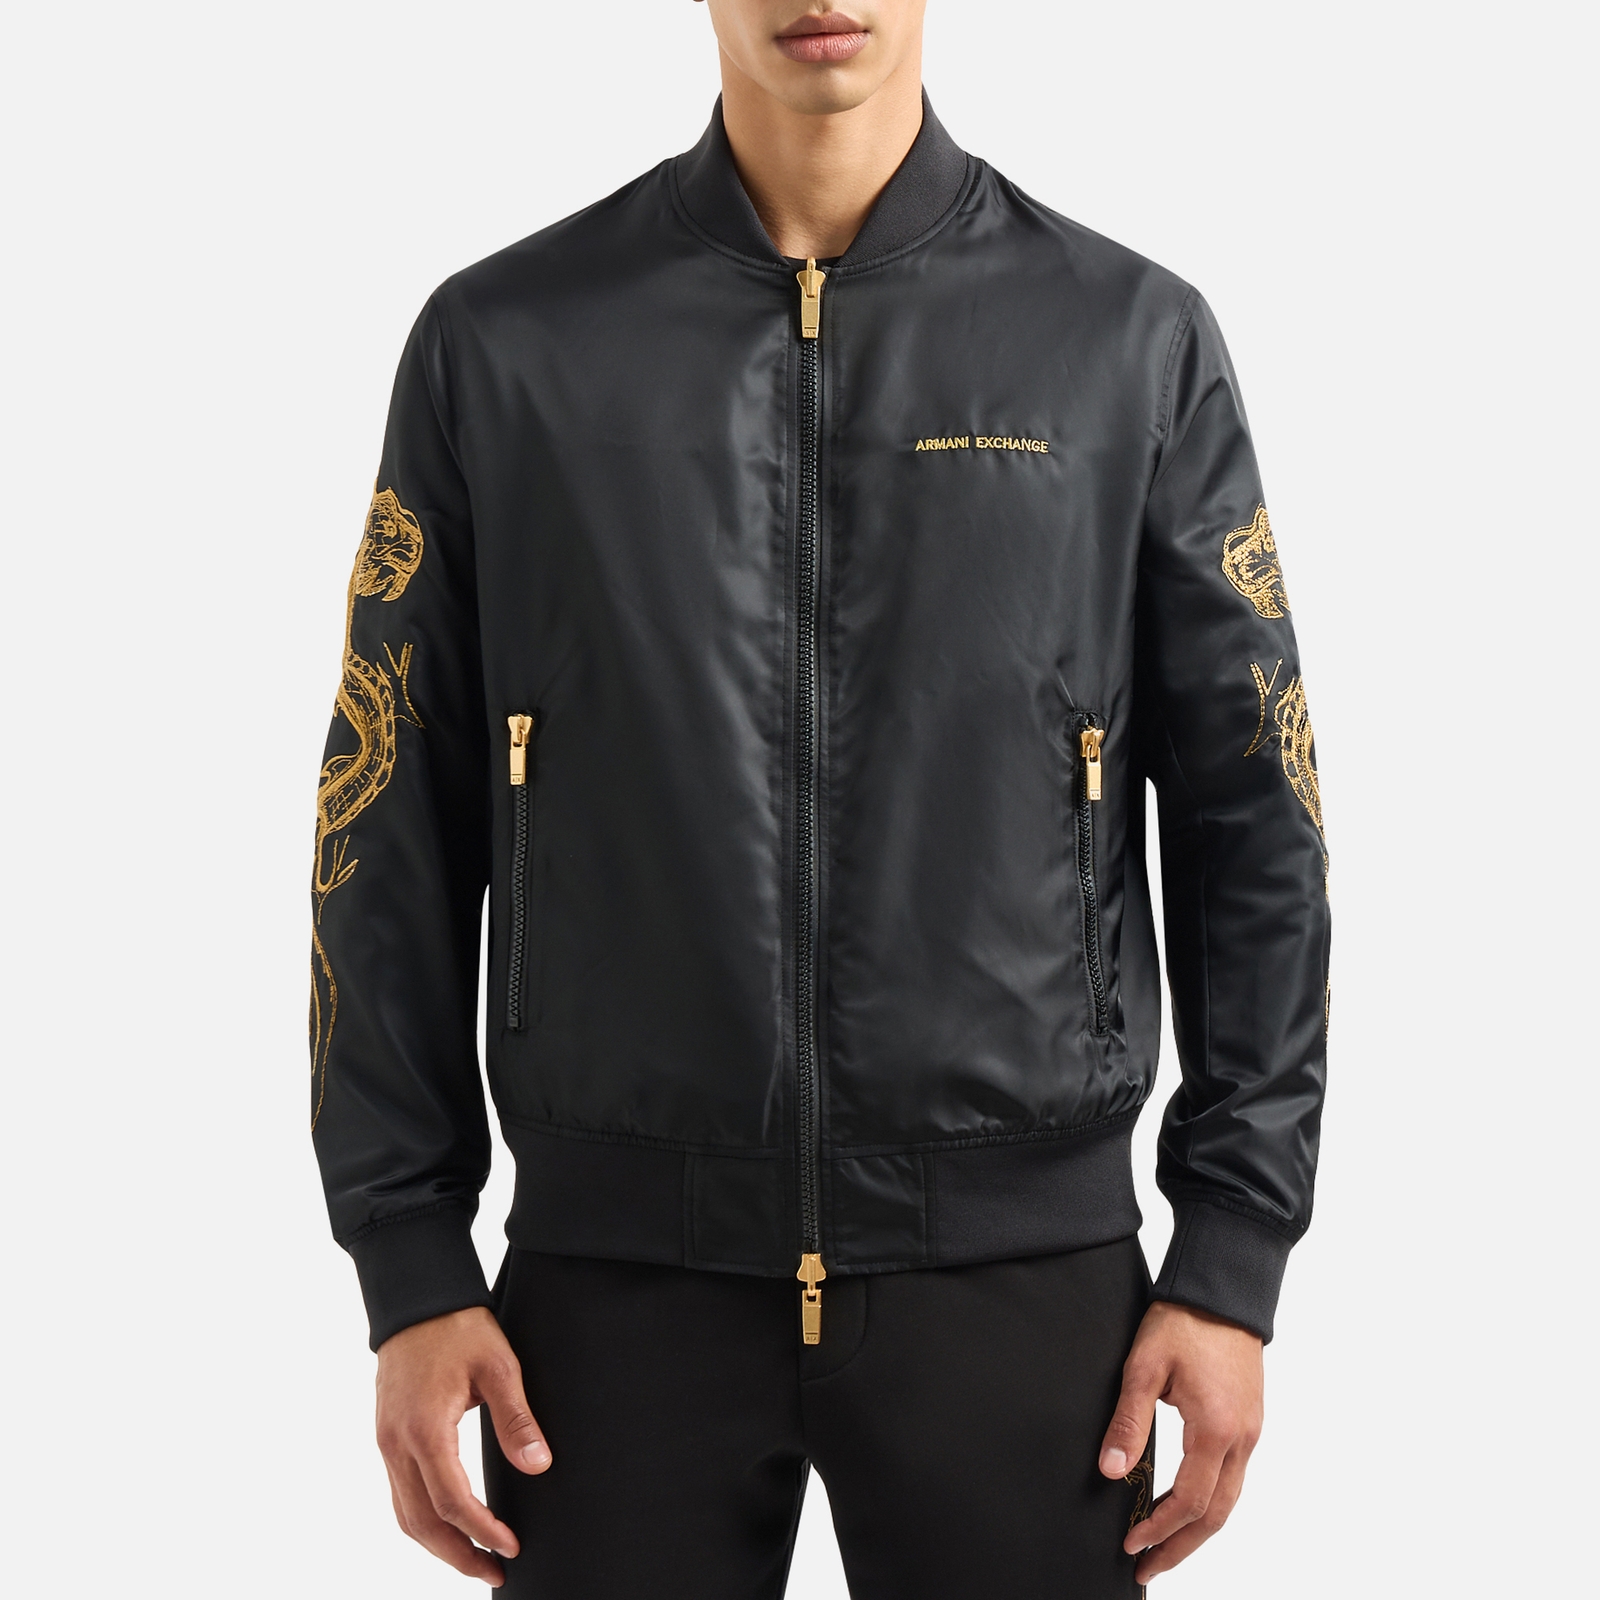 armani exchange cny lined nylon bomber jacket - s